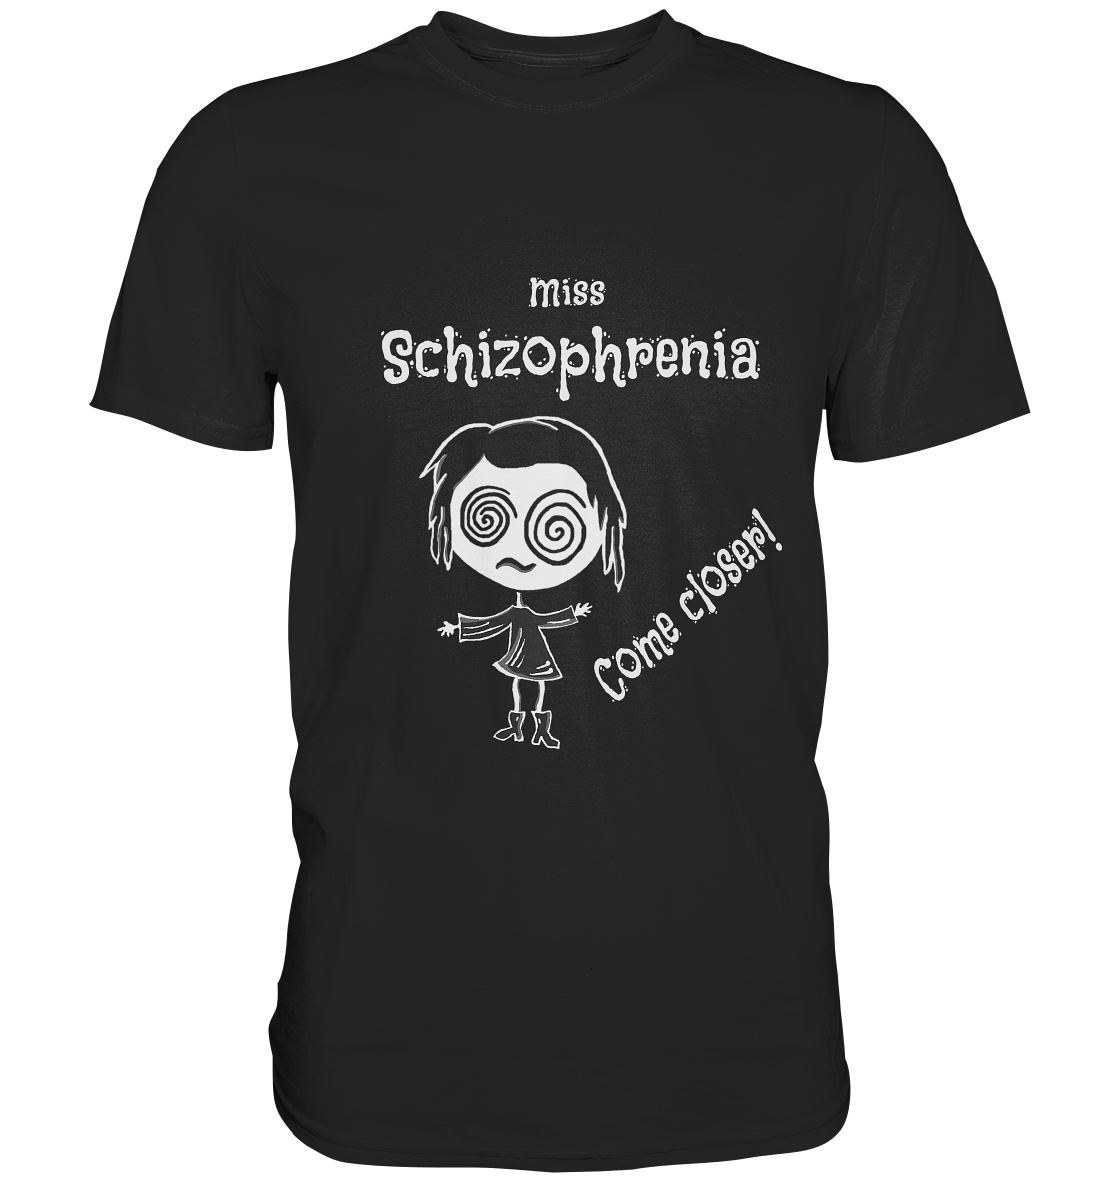 Miss Schizophrenia. Come closer! - Unisex Premium Shirt